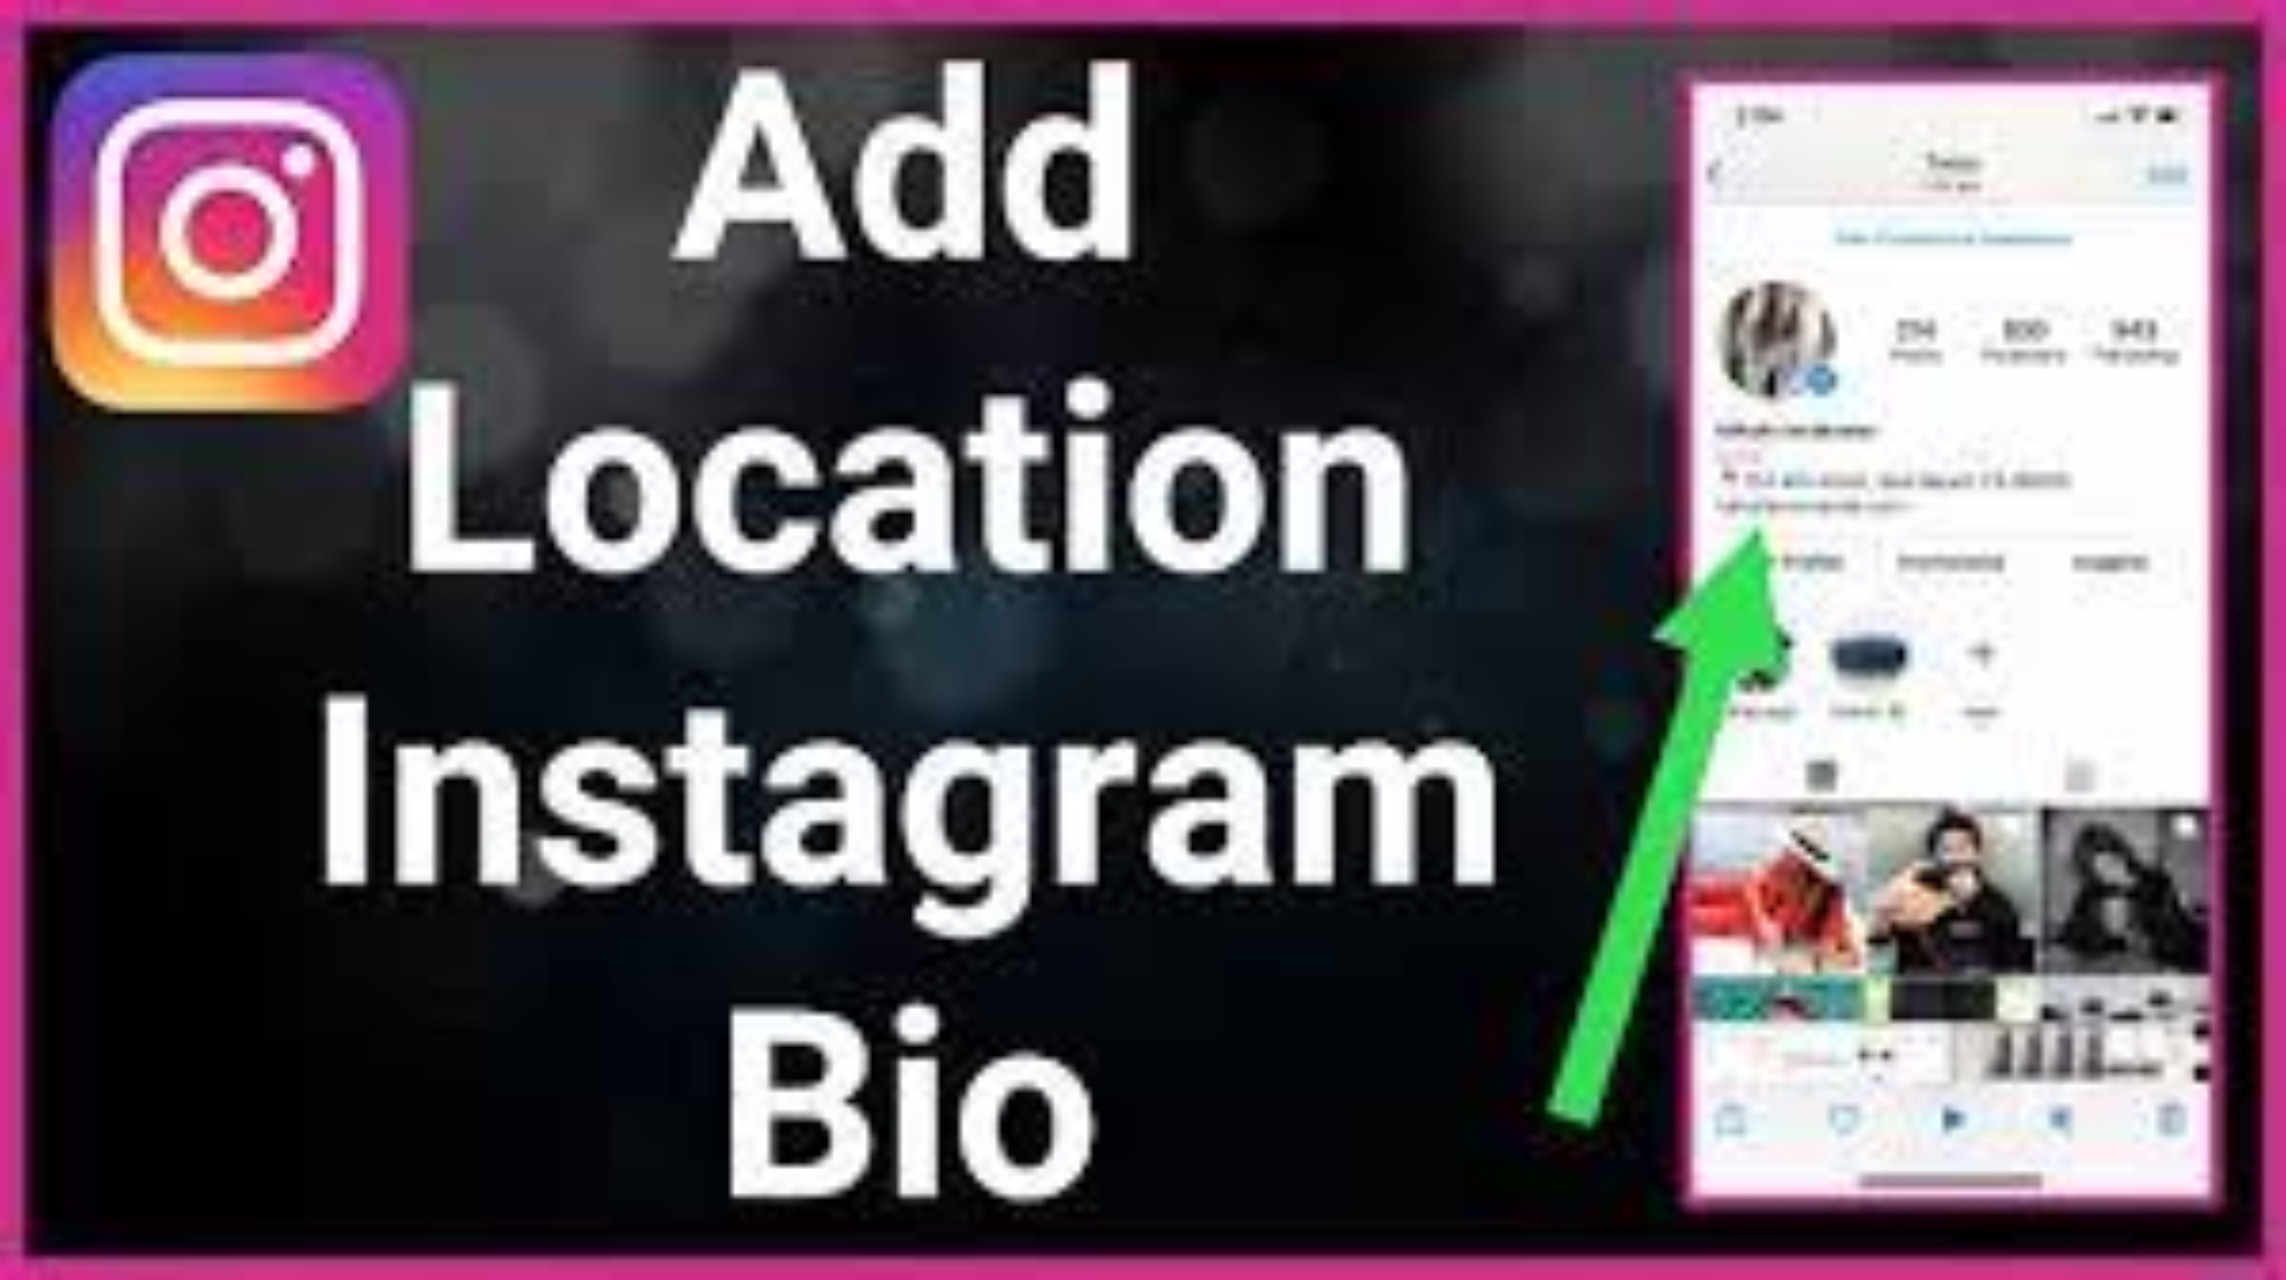 How To Add Location To Instagram Bio